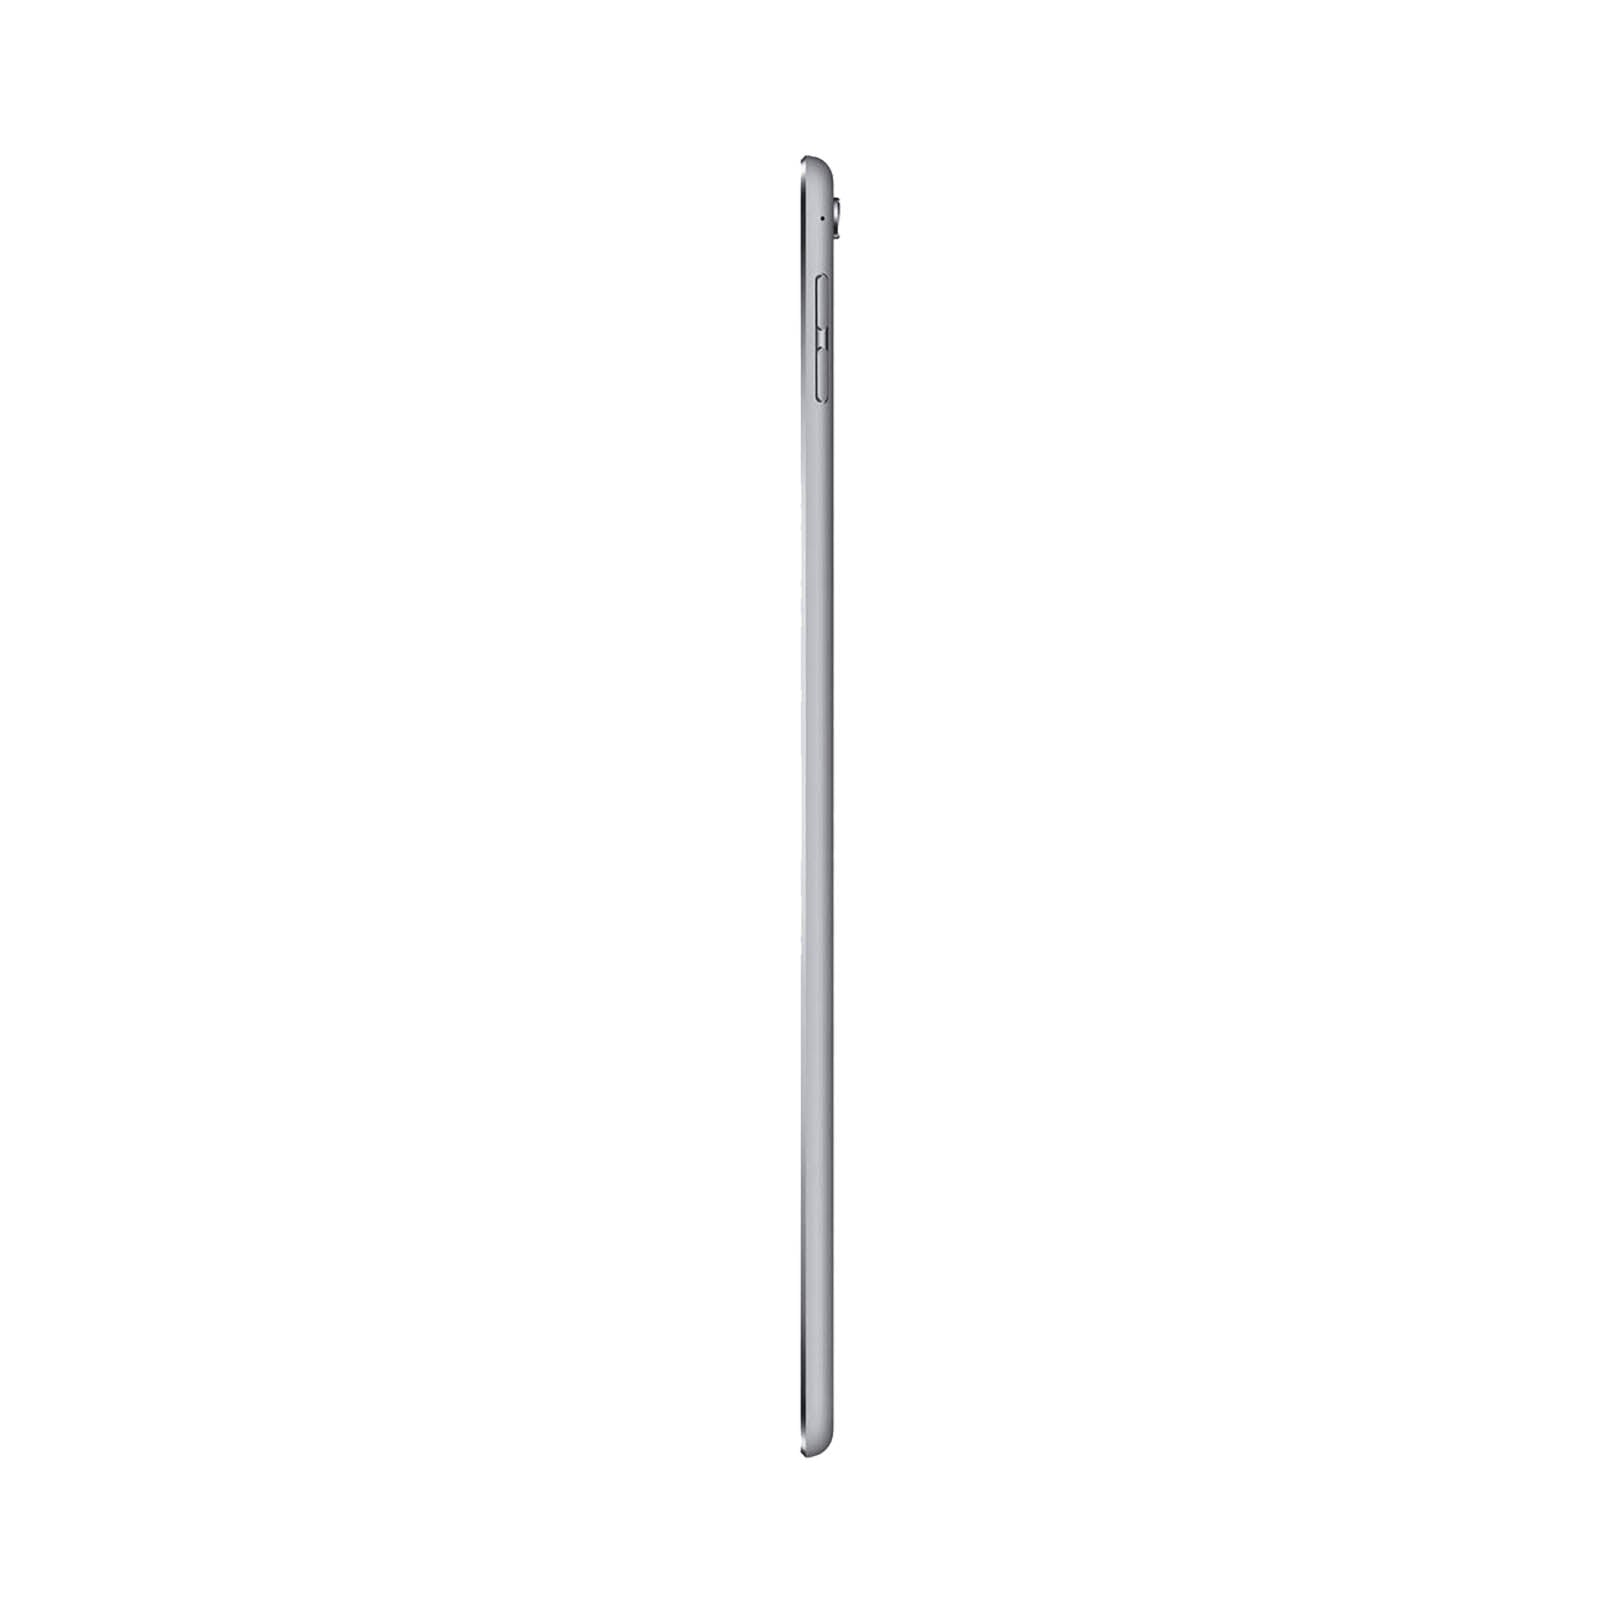 Apple iPad Pro 9.7" 32GB Space Grey Pristine - Unlocked